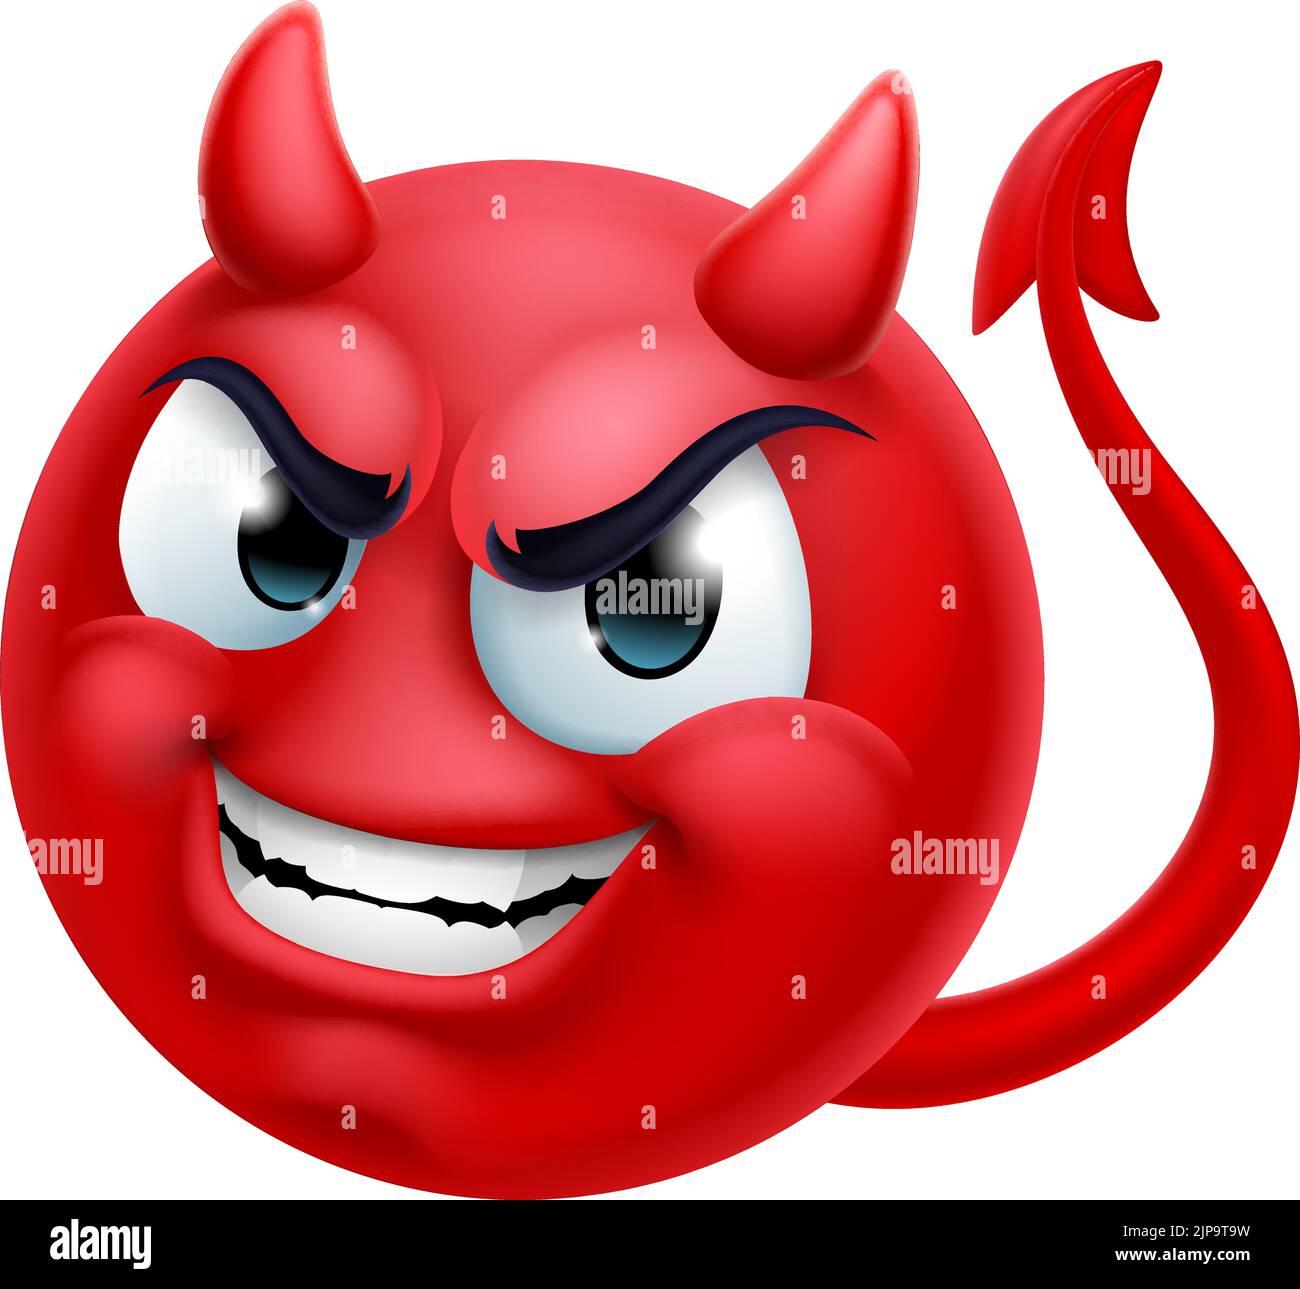 A red devil or satan emoji emoticon man face cartoon icon mascot. Stock Vector